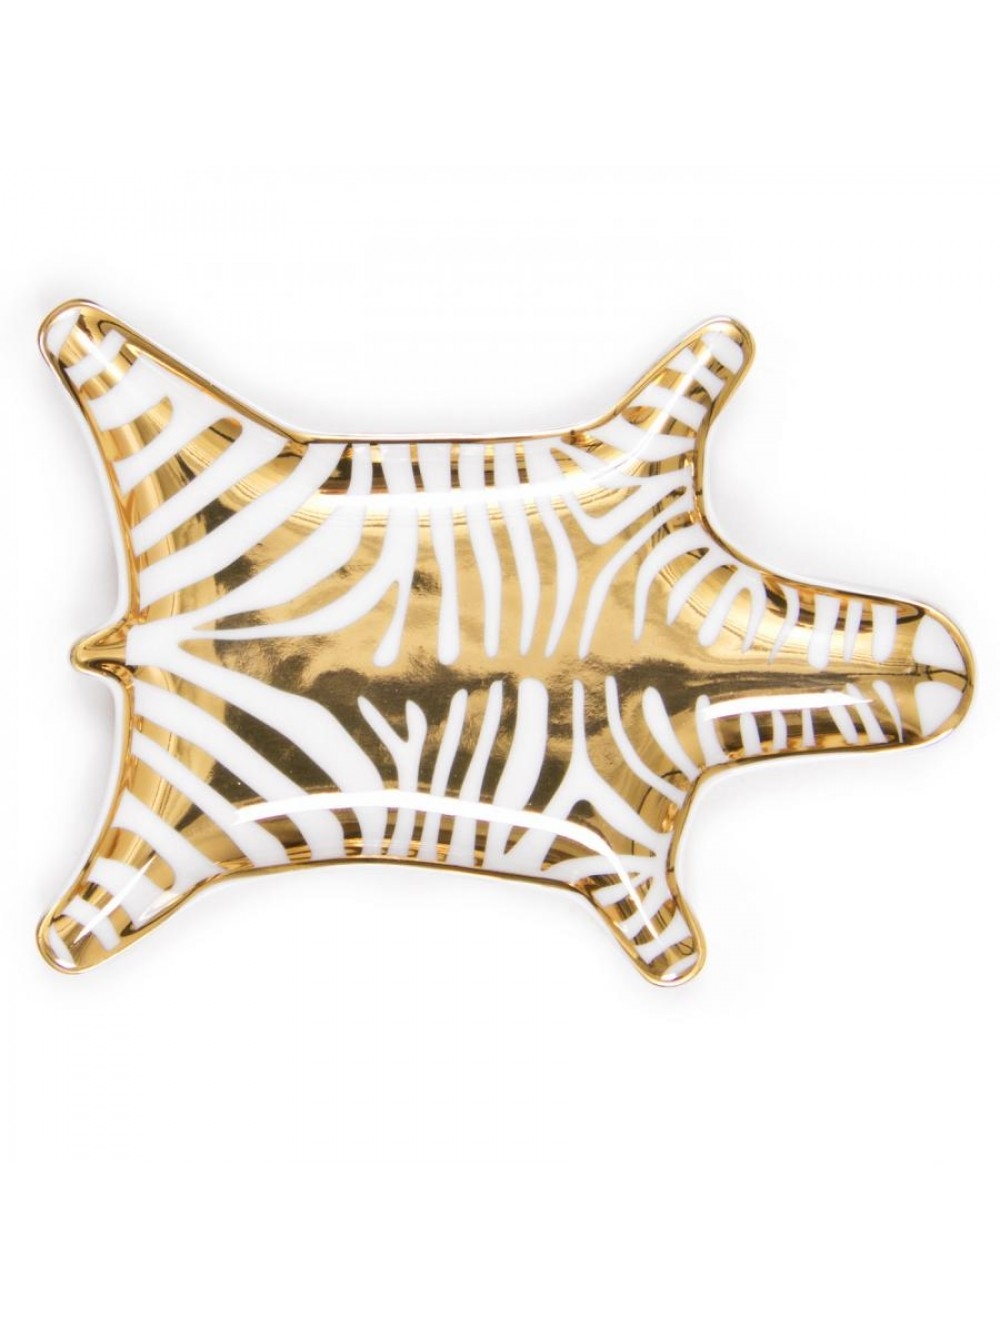 Jonathan Adler Metallic Zebra Dish - Gold - Image 0